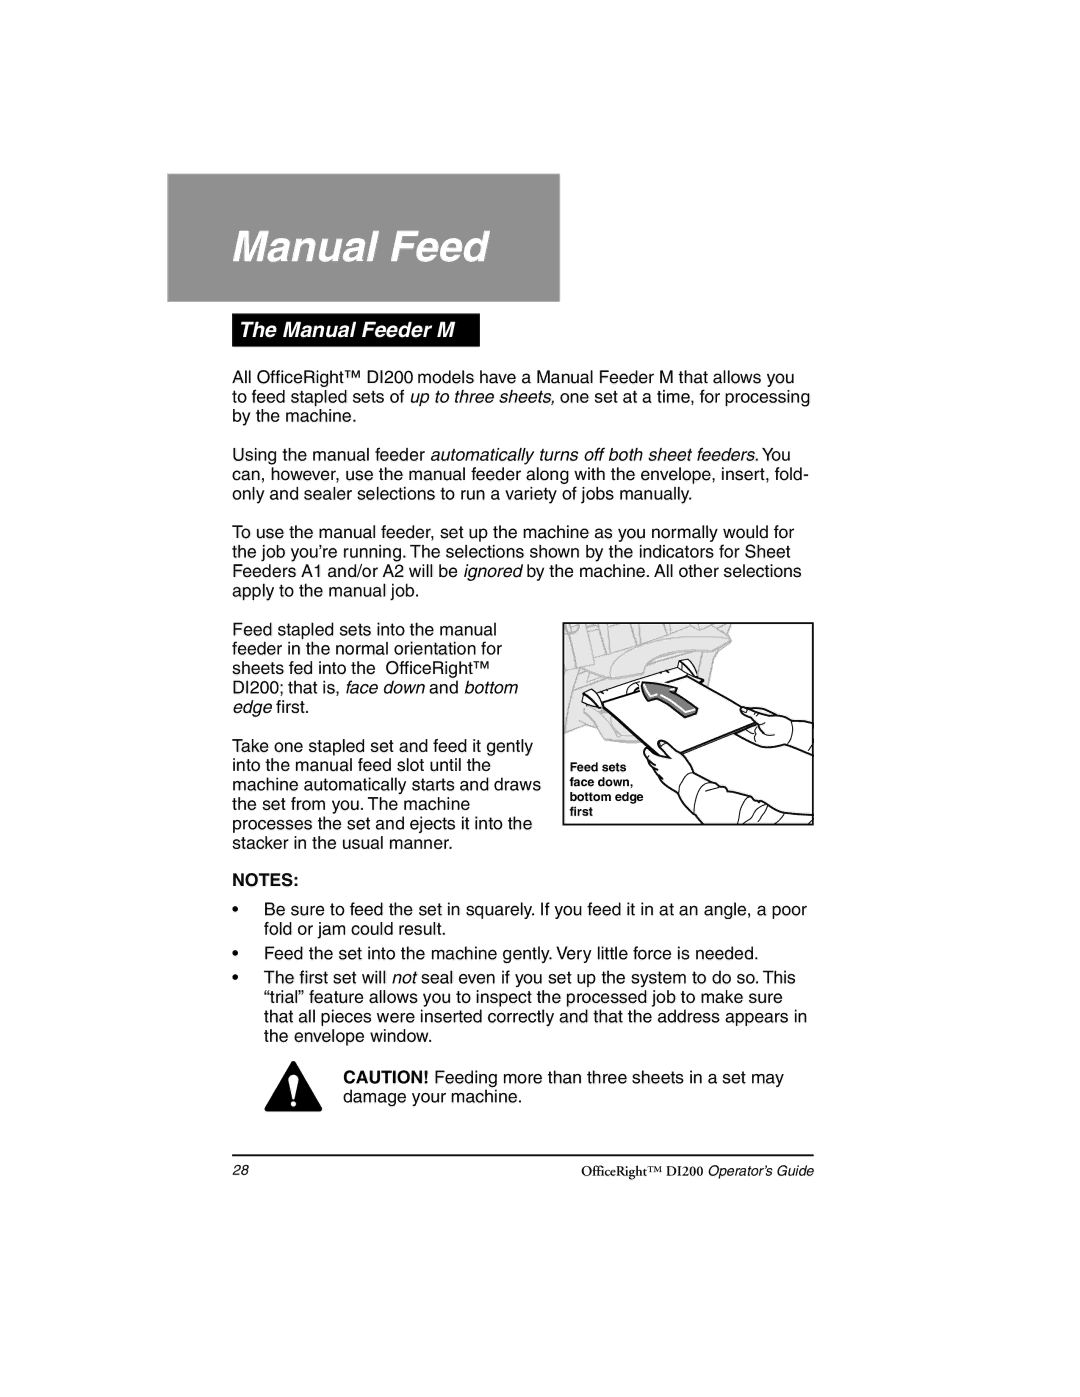 Pitney Bowes DI200 manual Manual Feeder M 